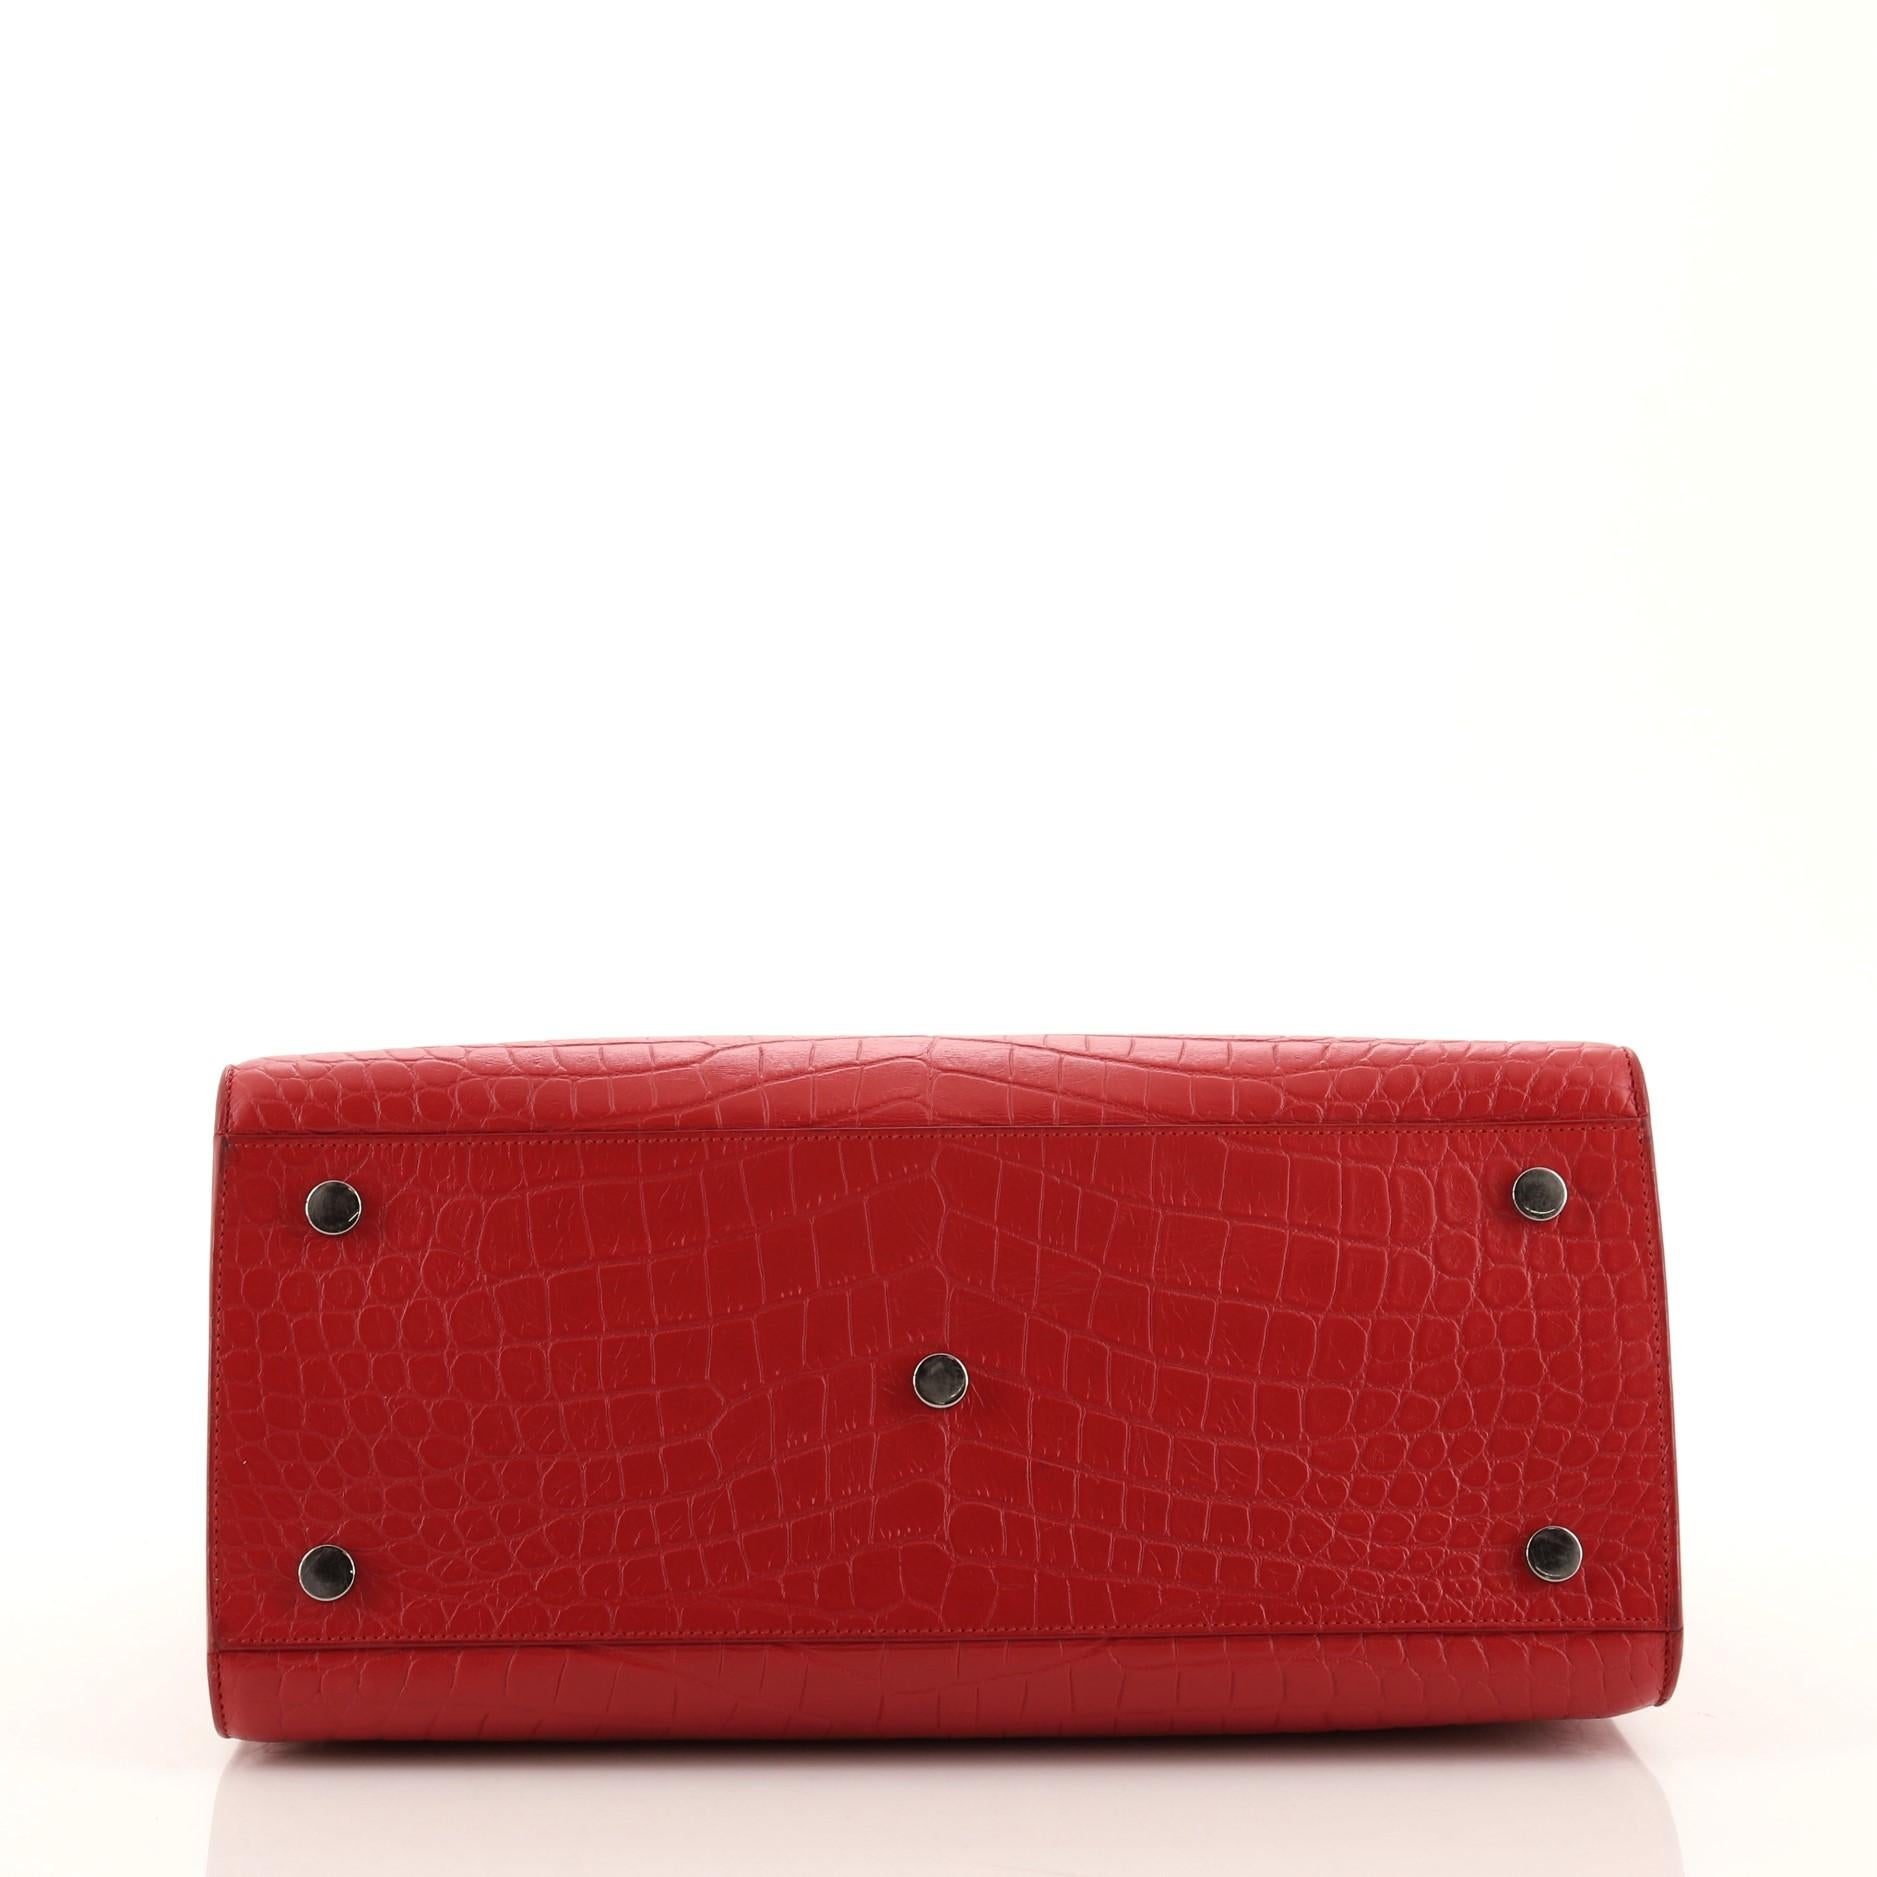 Red Saint Laurent Sac de Jour Bag Crocodile Embossed Leather Small